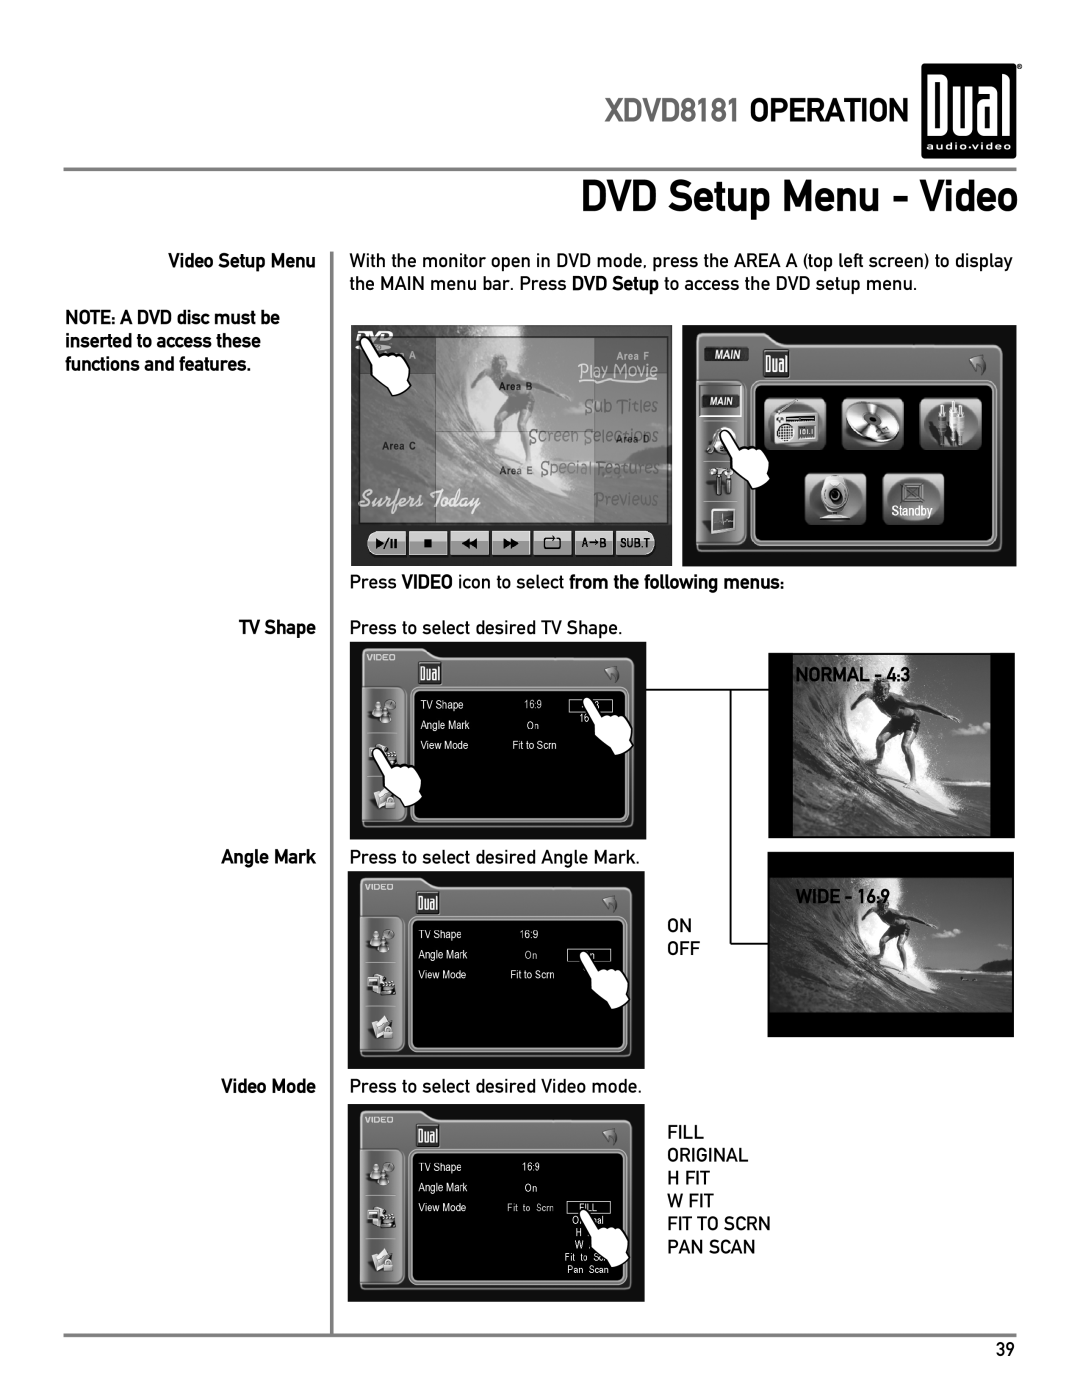 Dual DVD Setup Menu - Video, XDVD8181 OPERATION, Video Setup Menu, TV Shape, Angle Mark, NORMAL - 4 3 WIDE, Video Mode 